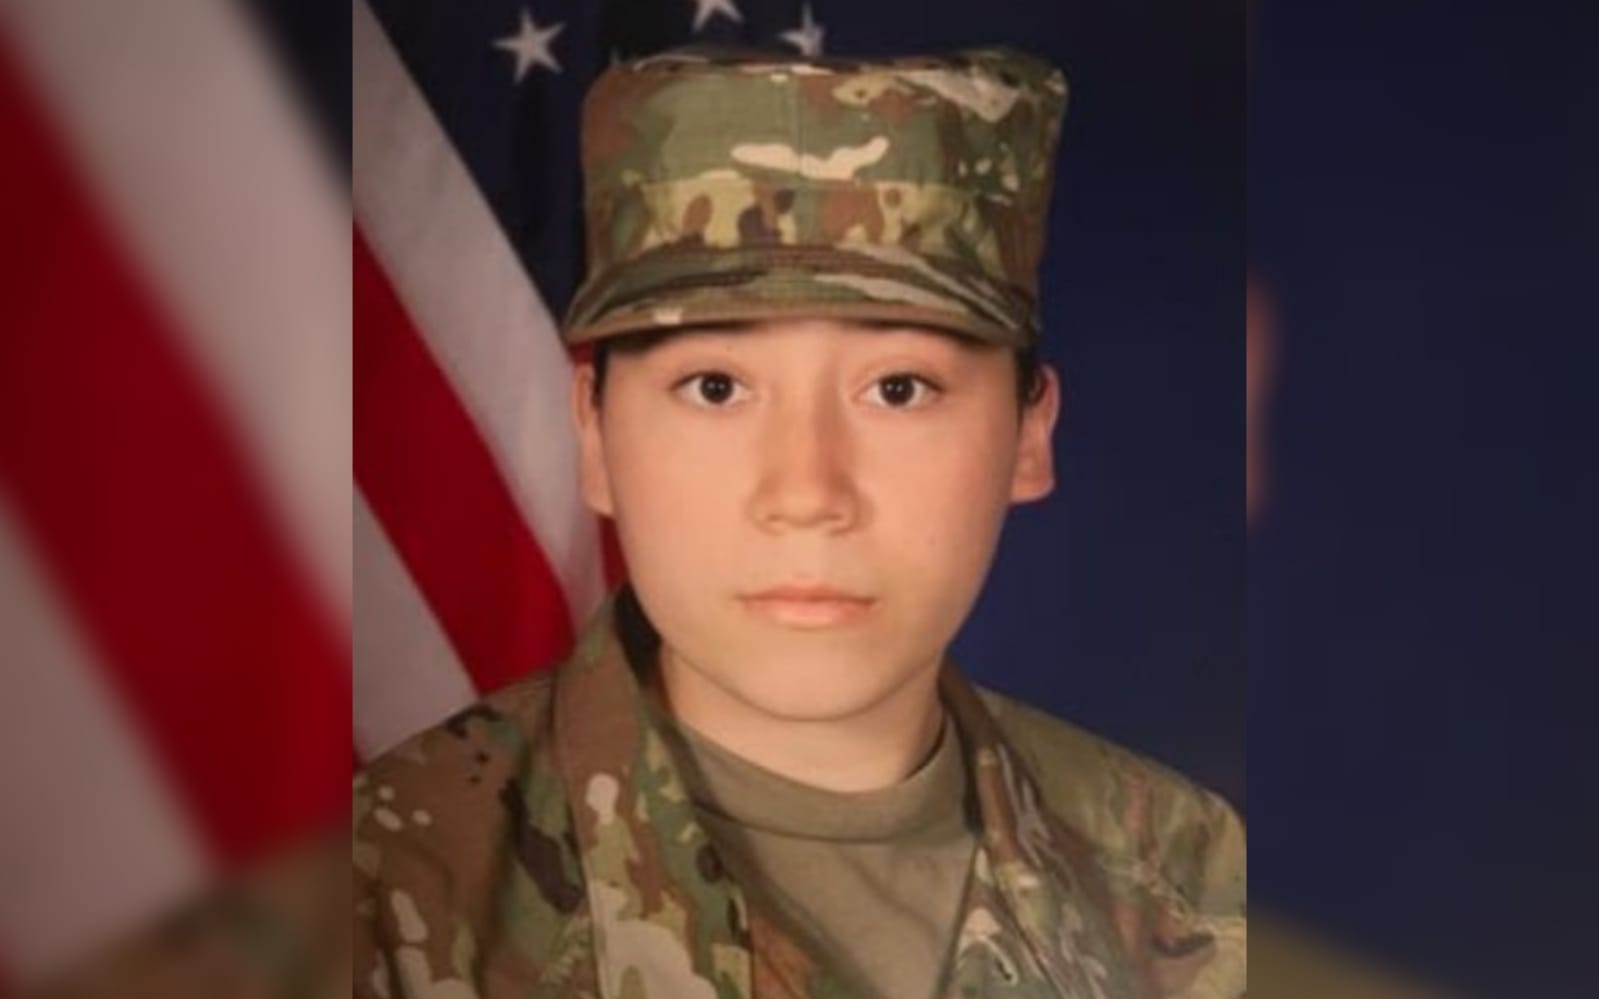 Hallan muerta a Ana Fernanda, soldado mexicana en la base de Fort Hood, Texas